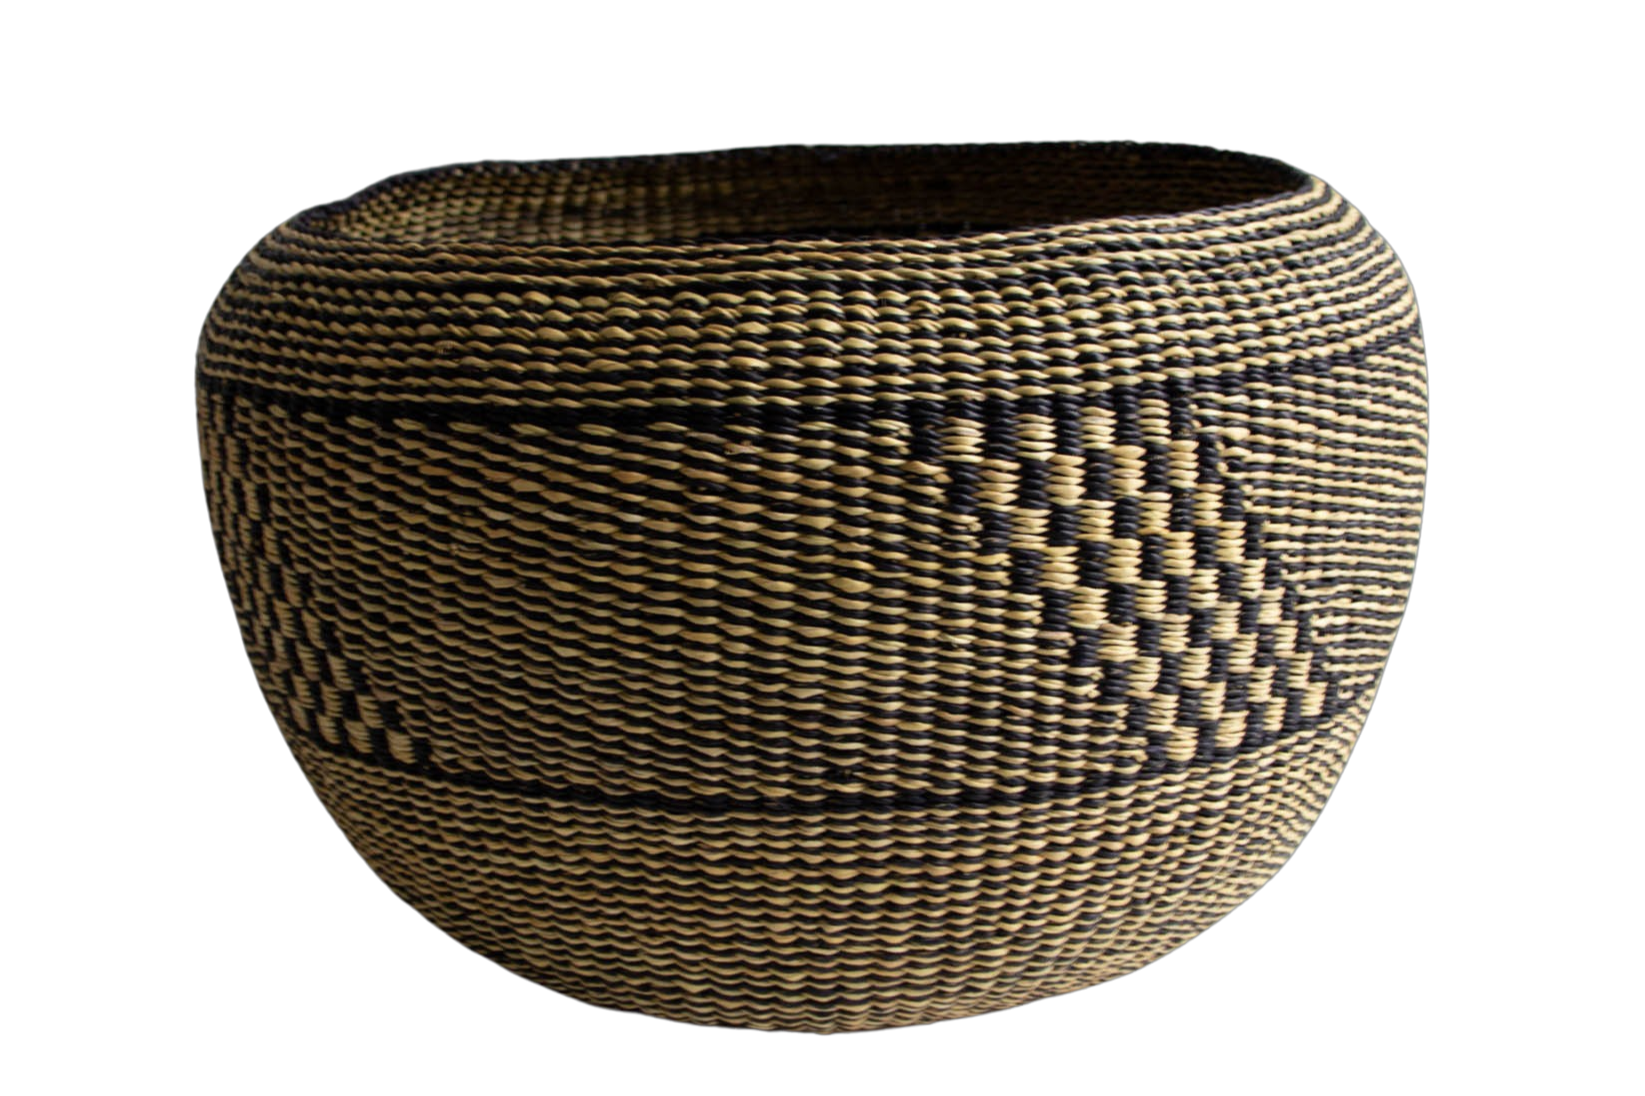 Jumbo Special negro Bolga de fibra natural - Basket - ETHNICA DECO